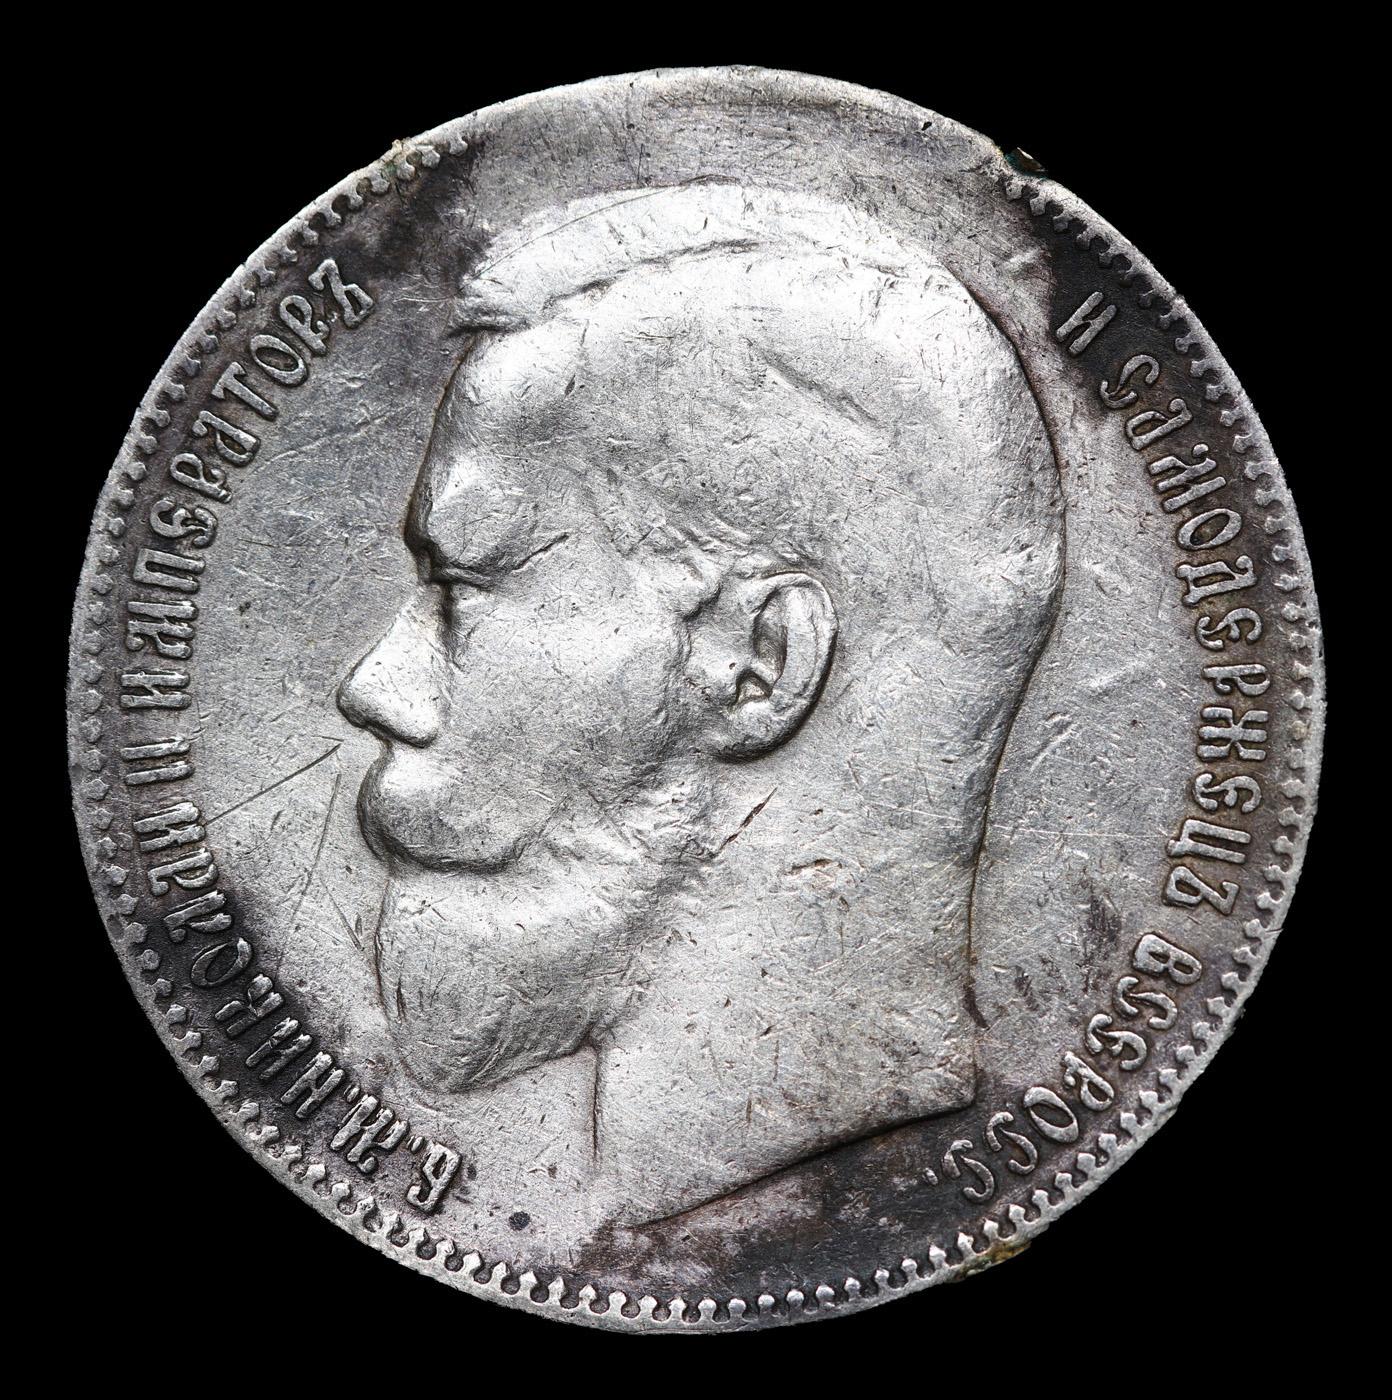 1899 Russia 1 Ruble Silver Y# 59.1 Grades Choice AU